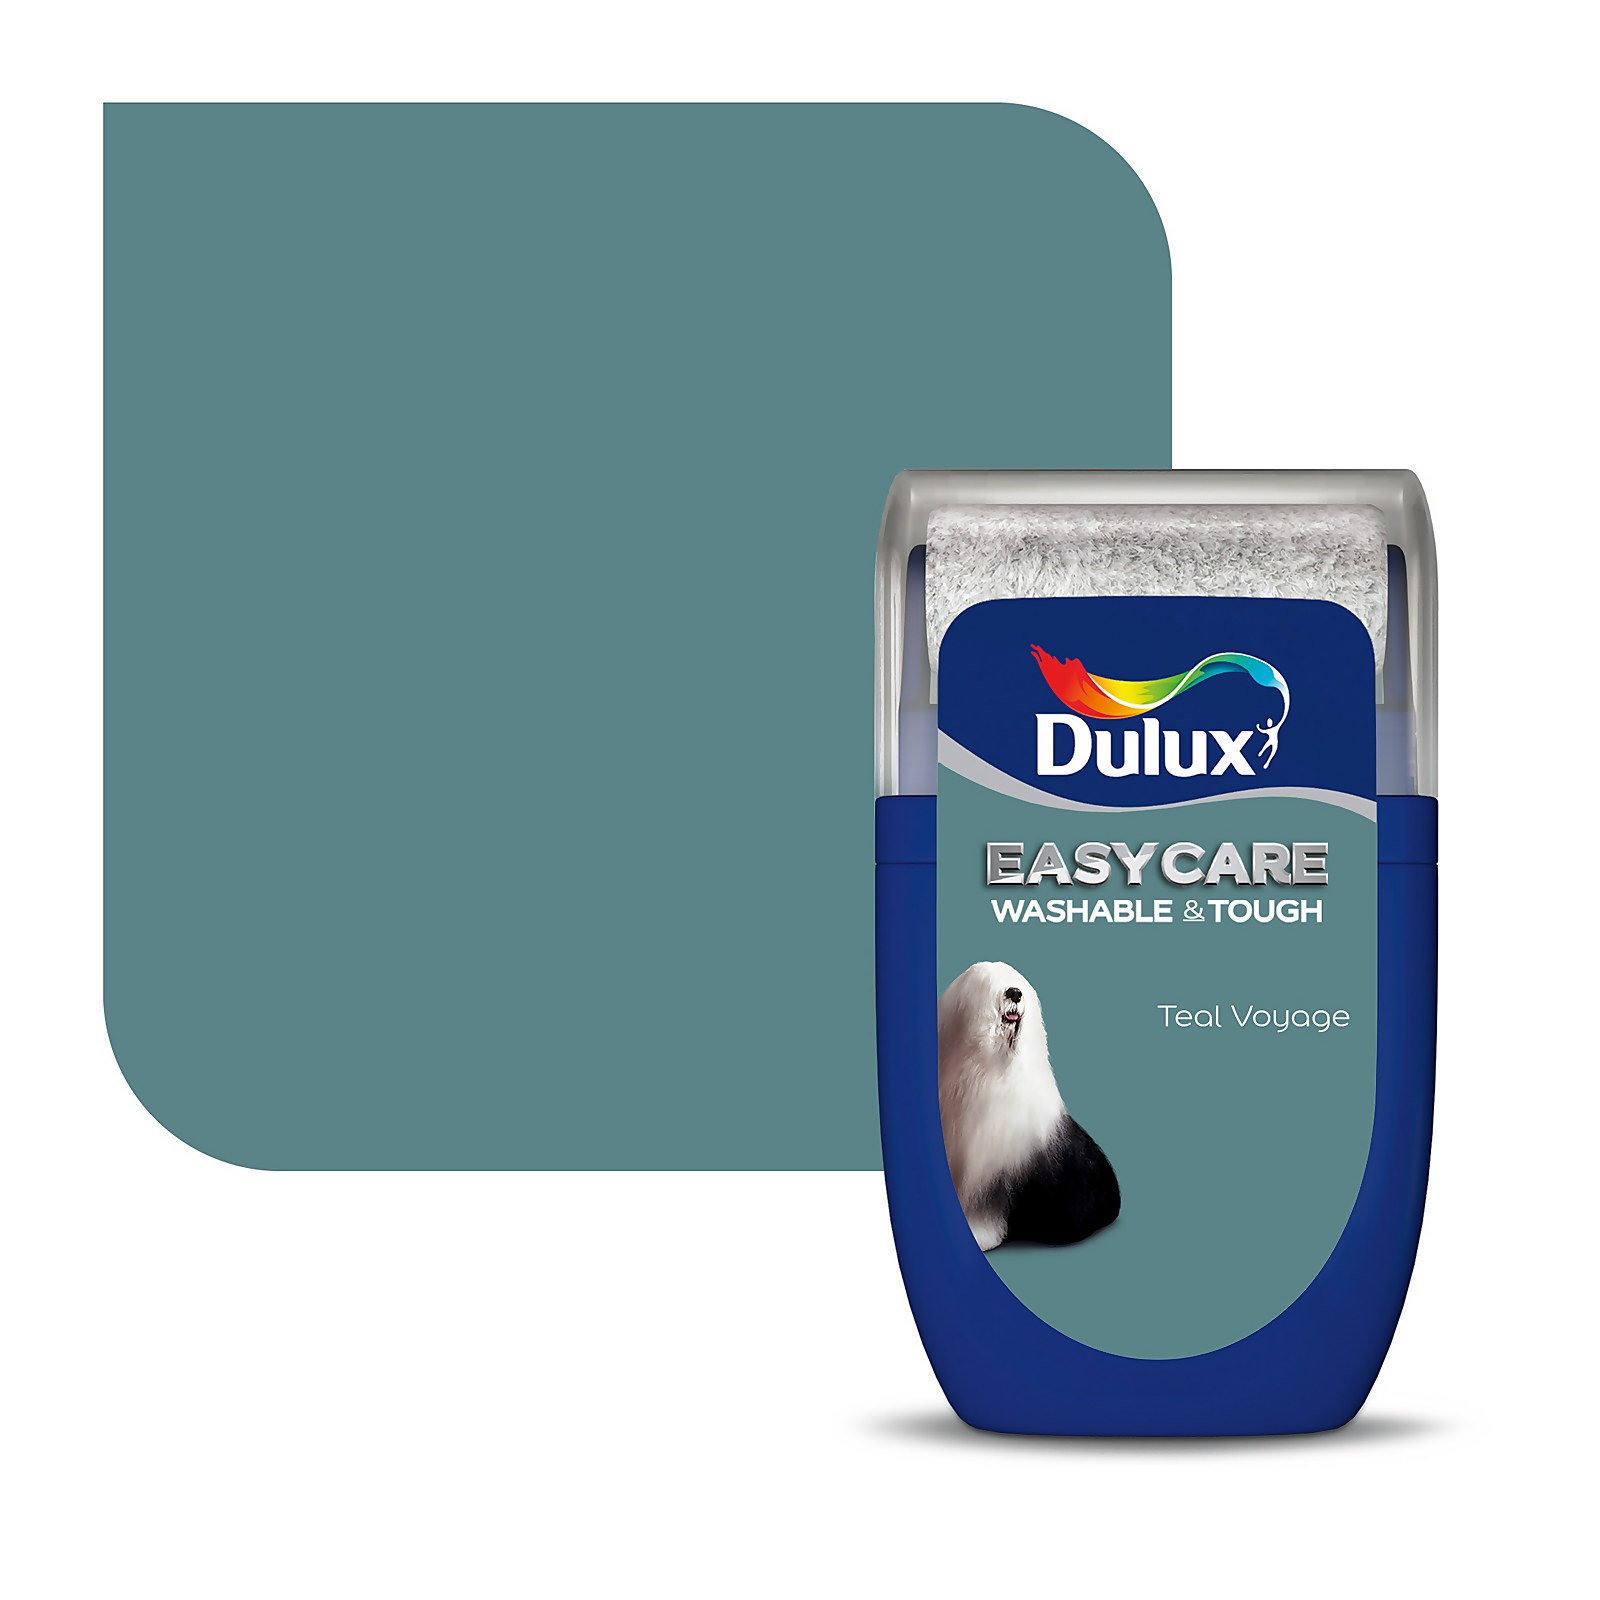 Dulux Easycare Washable & Tough Paint Teal Voyage - Tester 30ml